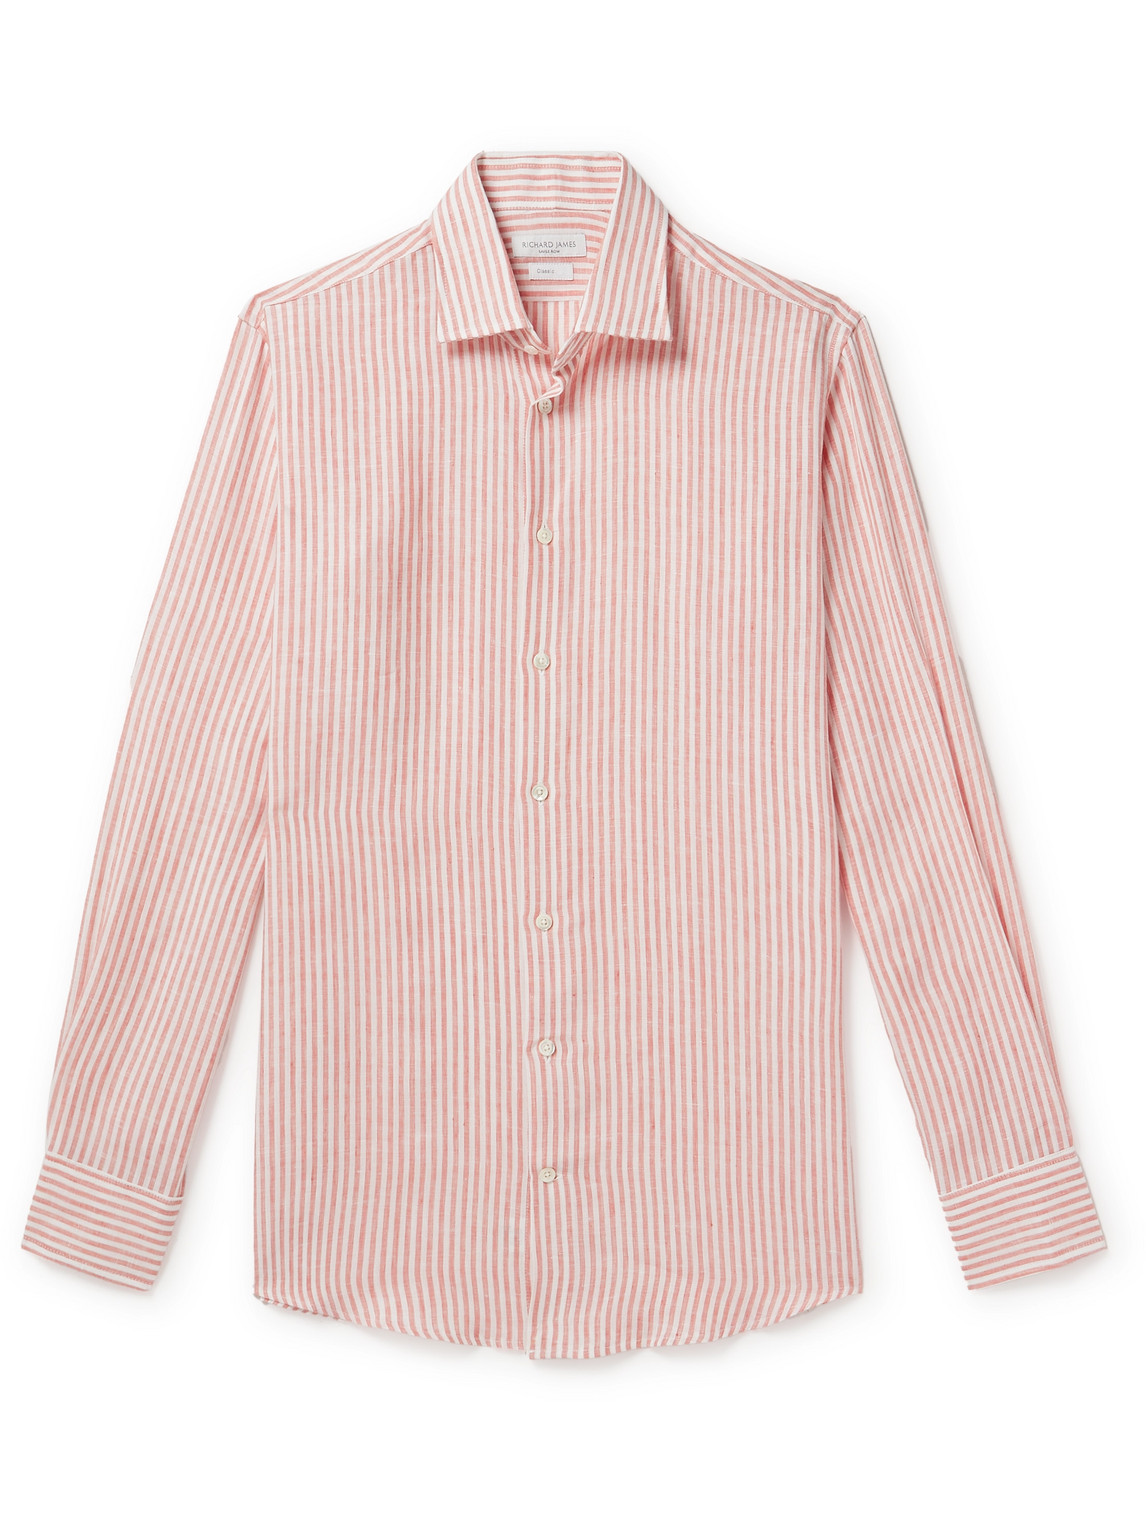 Richard James - Striped Linen Shirt - Men - Pink - UK/US 16.5 von Richard James